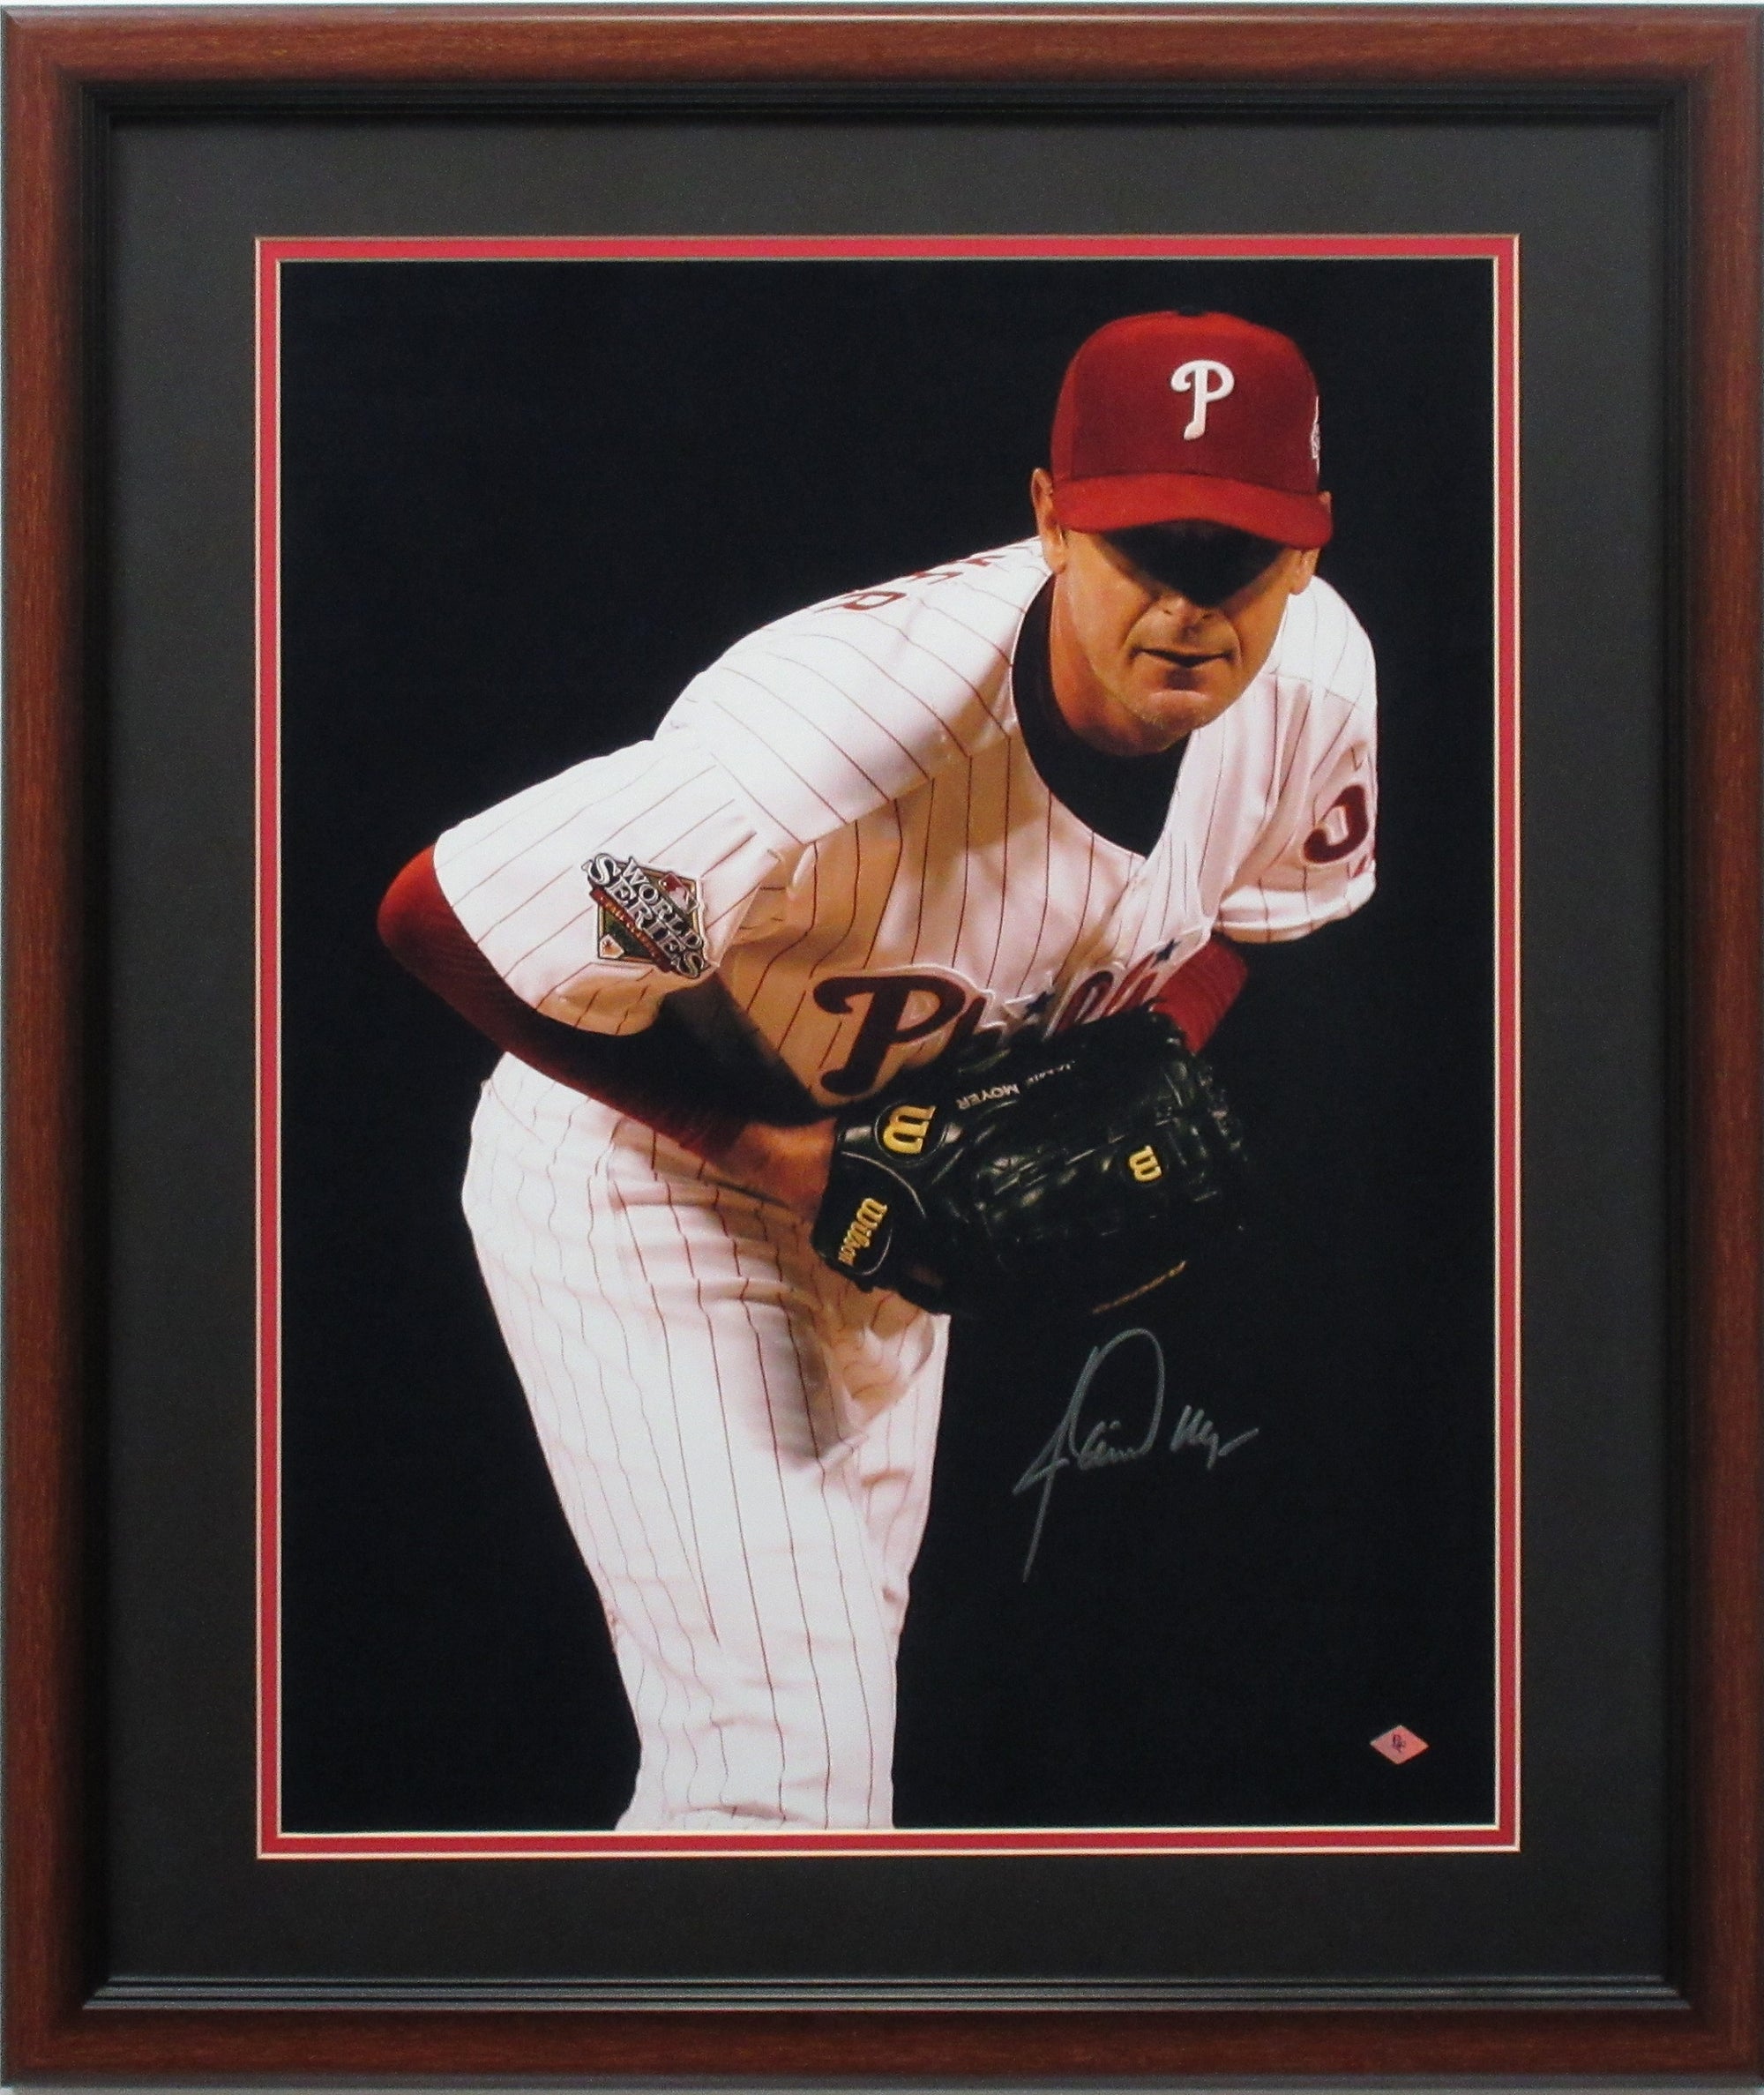 John Kruk Philadelphia Phillies Autographed 16x20 Photo Autographed